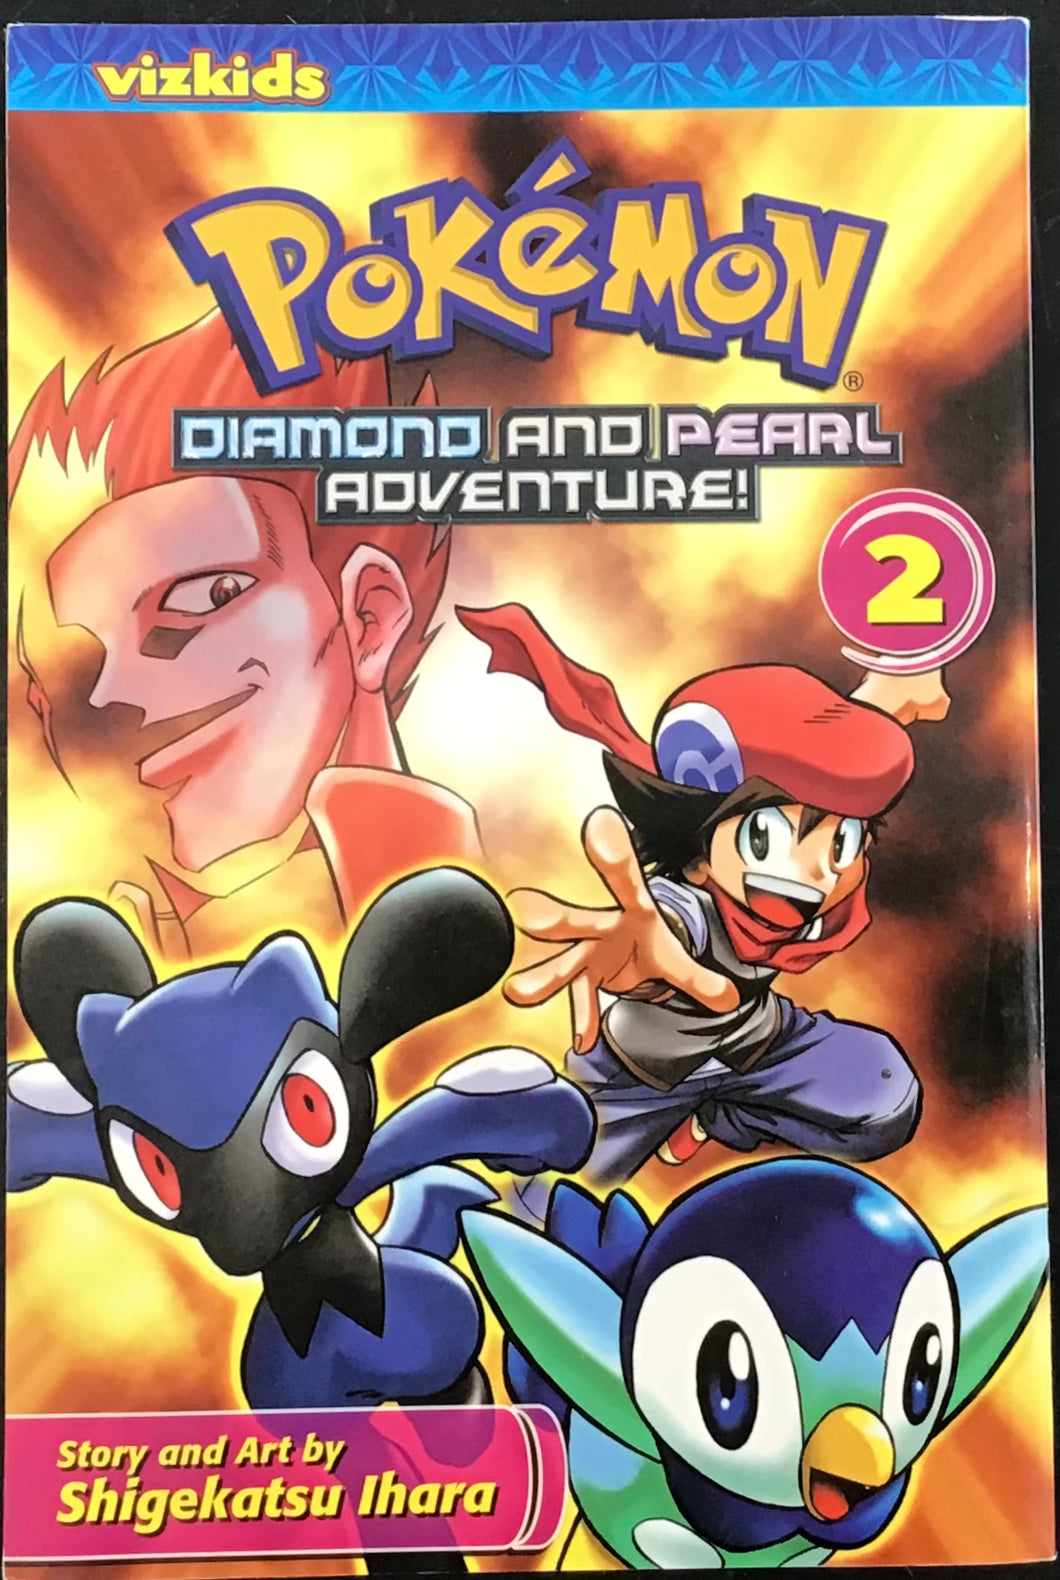 Pokemon Diamond and Pearl Adventure